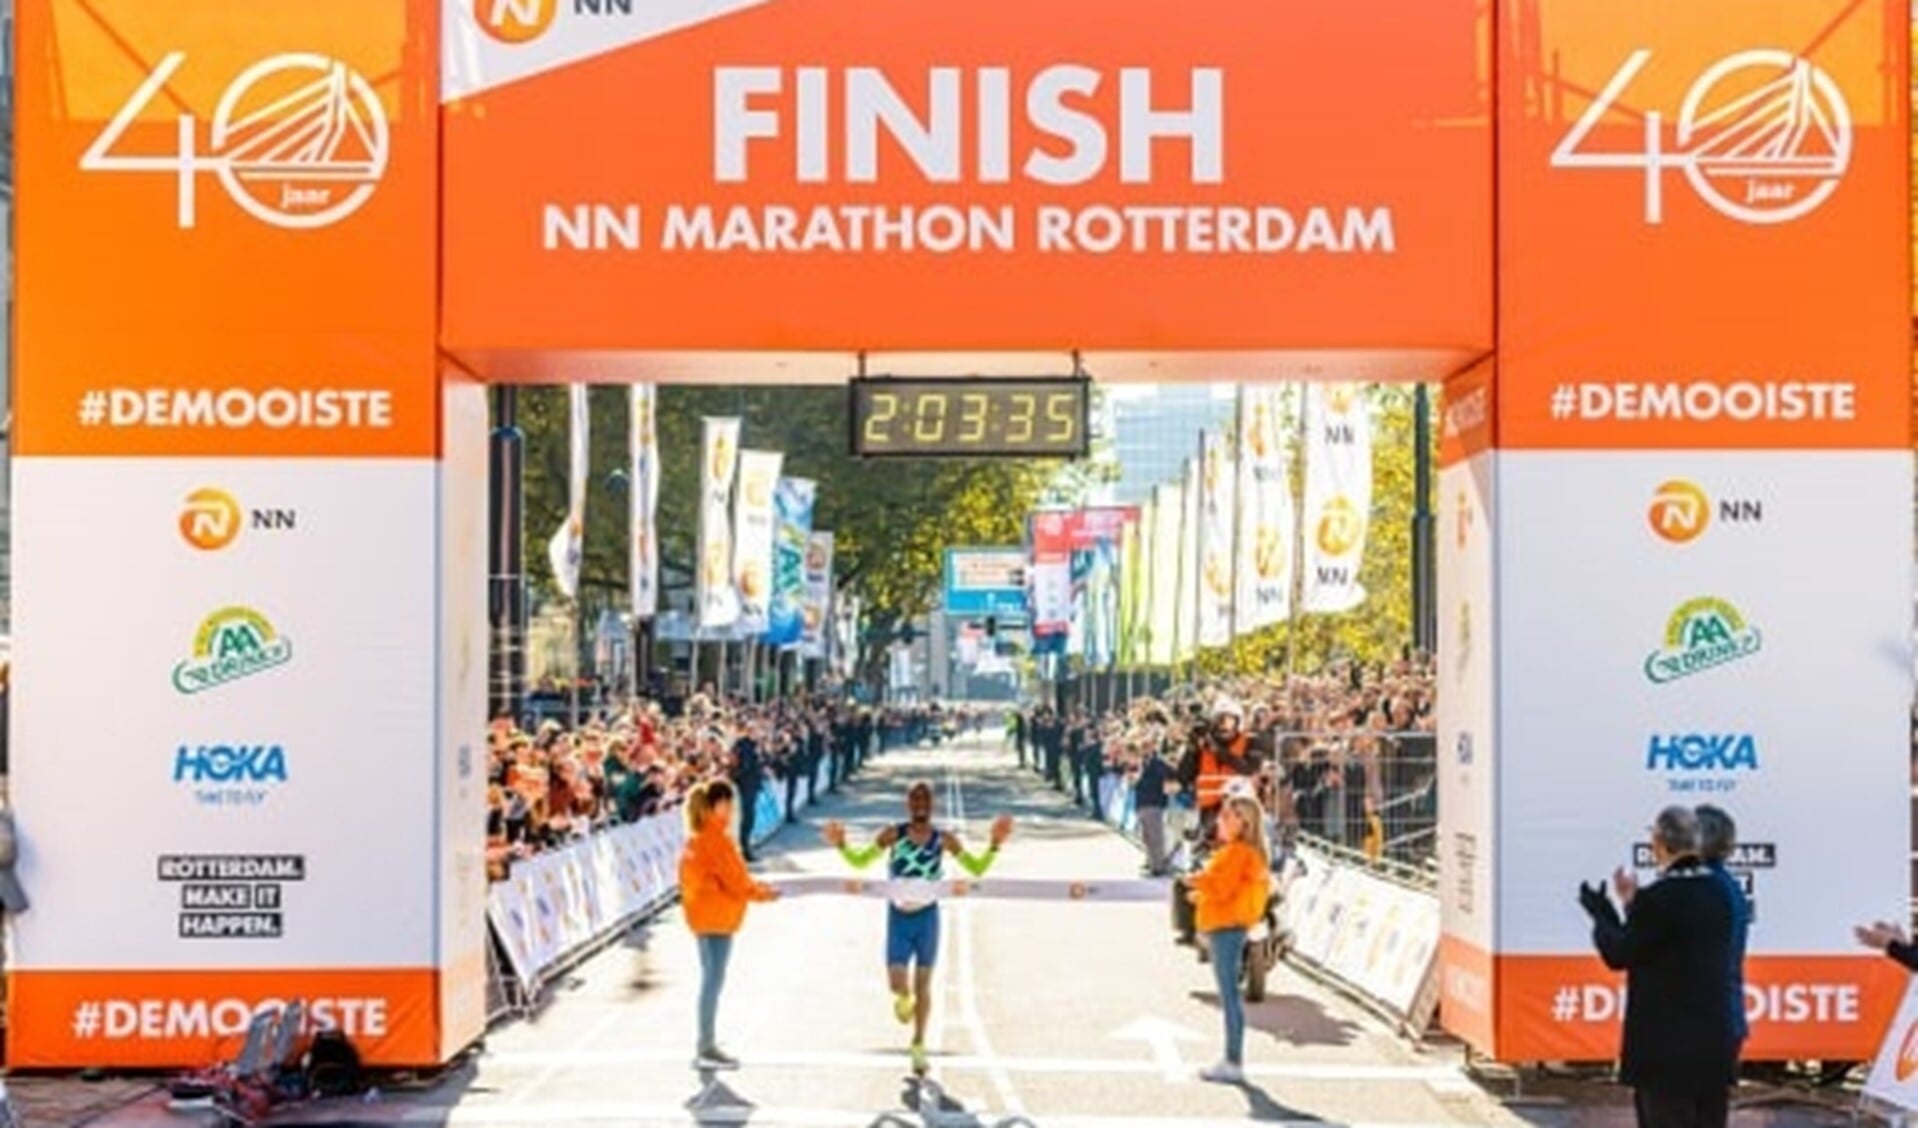 Bashir Abdi won de marathon in 2021 en keert in 2022 terug samen met zijn boezemvriend Abdi Nageeye. Foto: NN Marathon Rotterdam